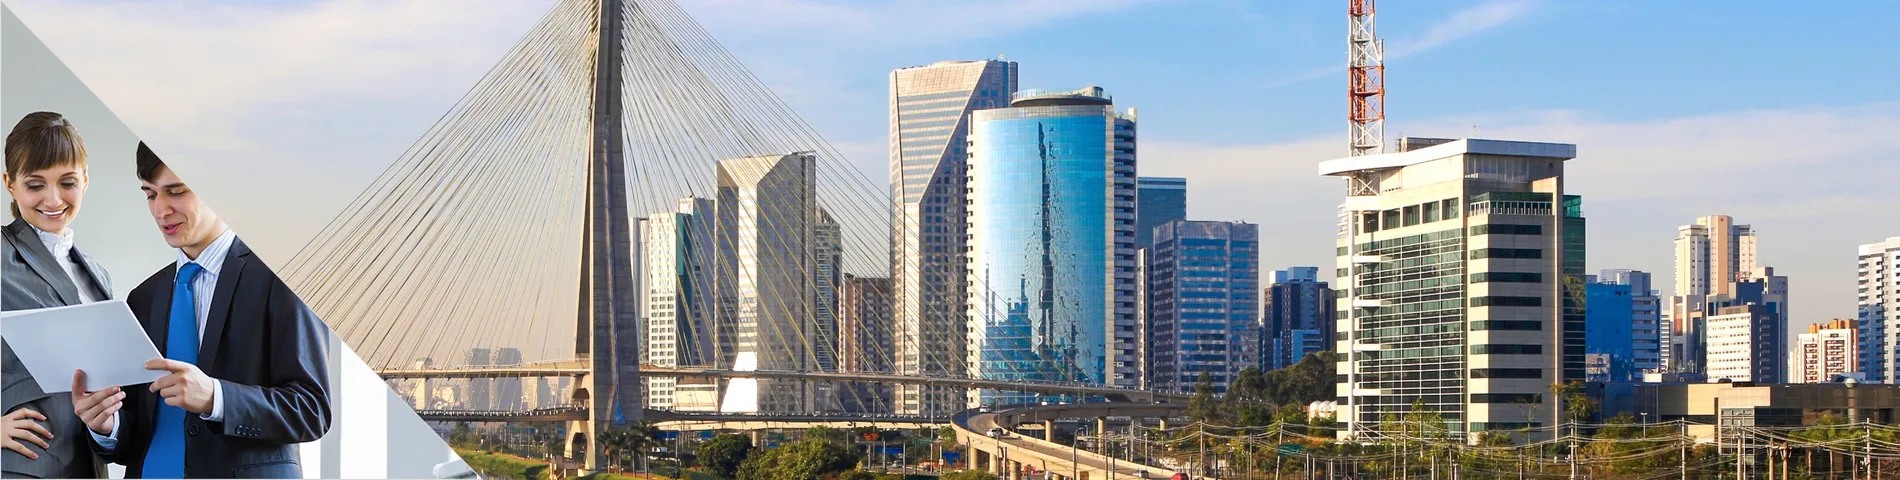 Sao Paulo - Business One-to-One